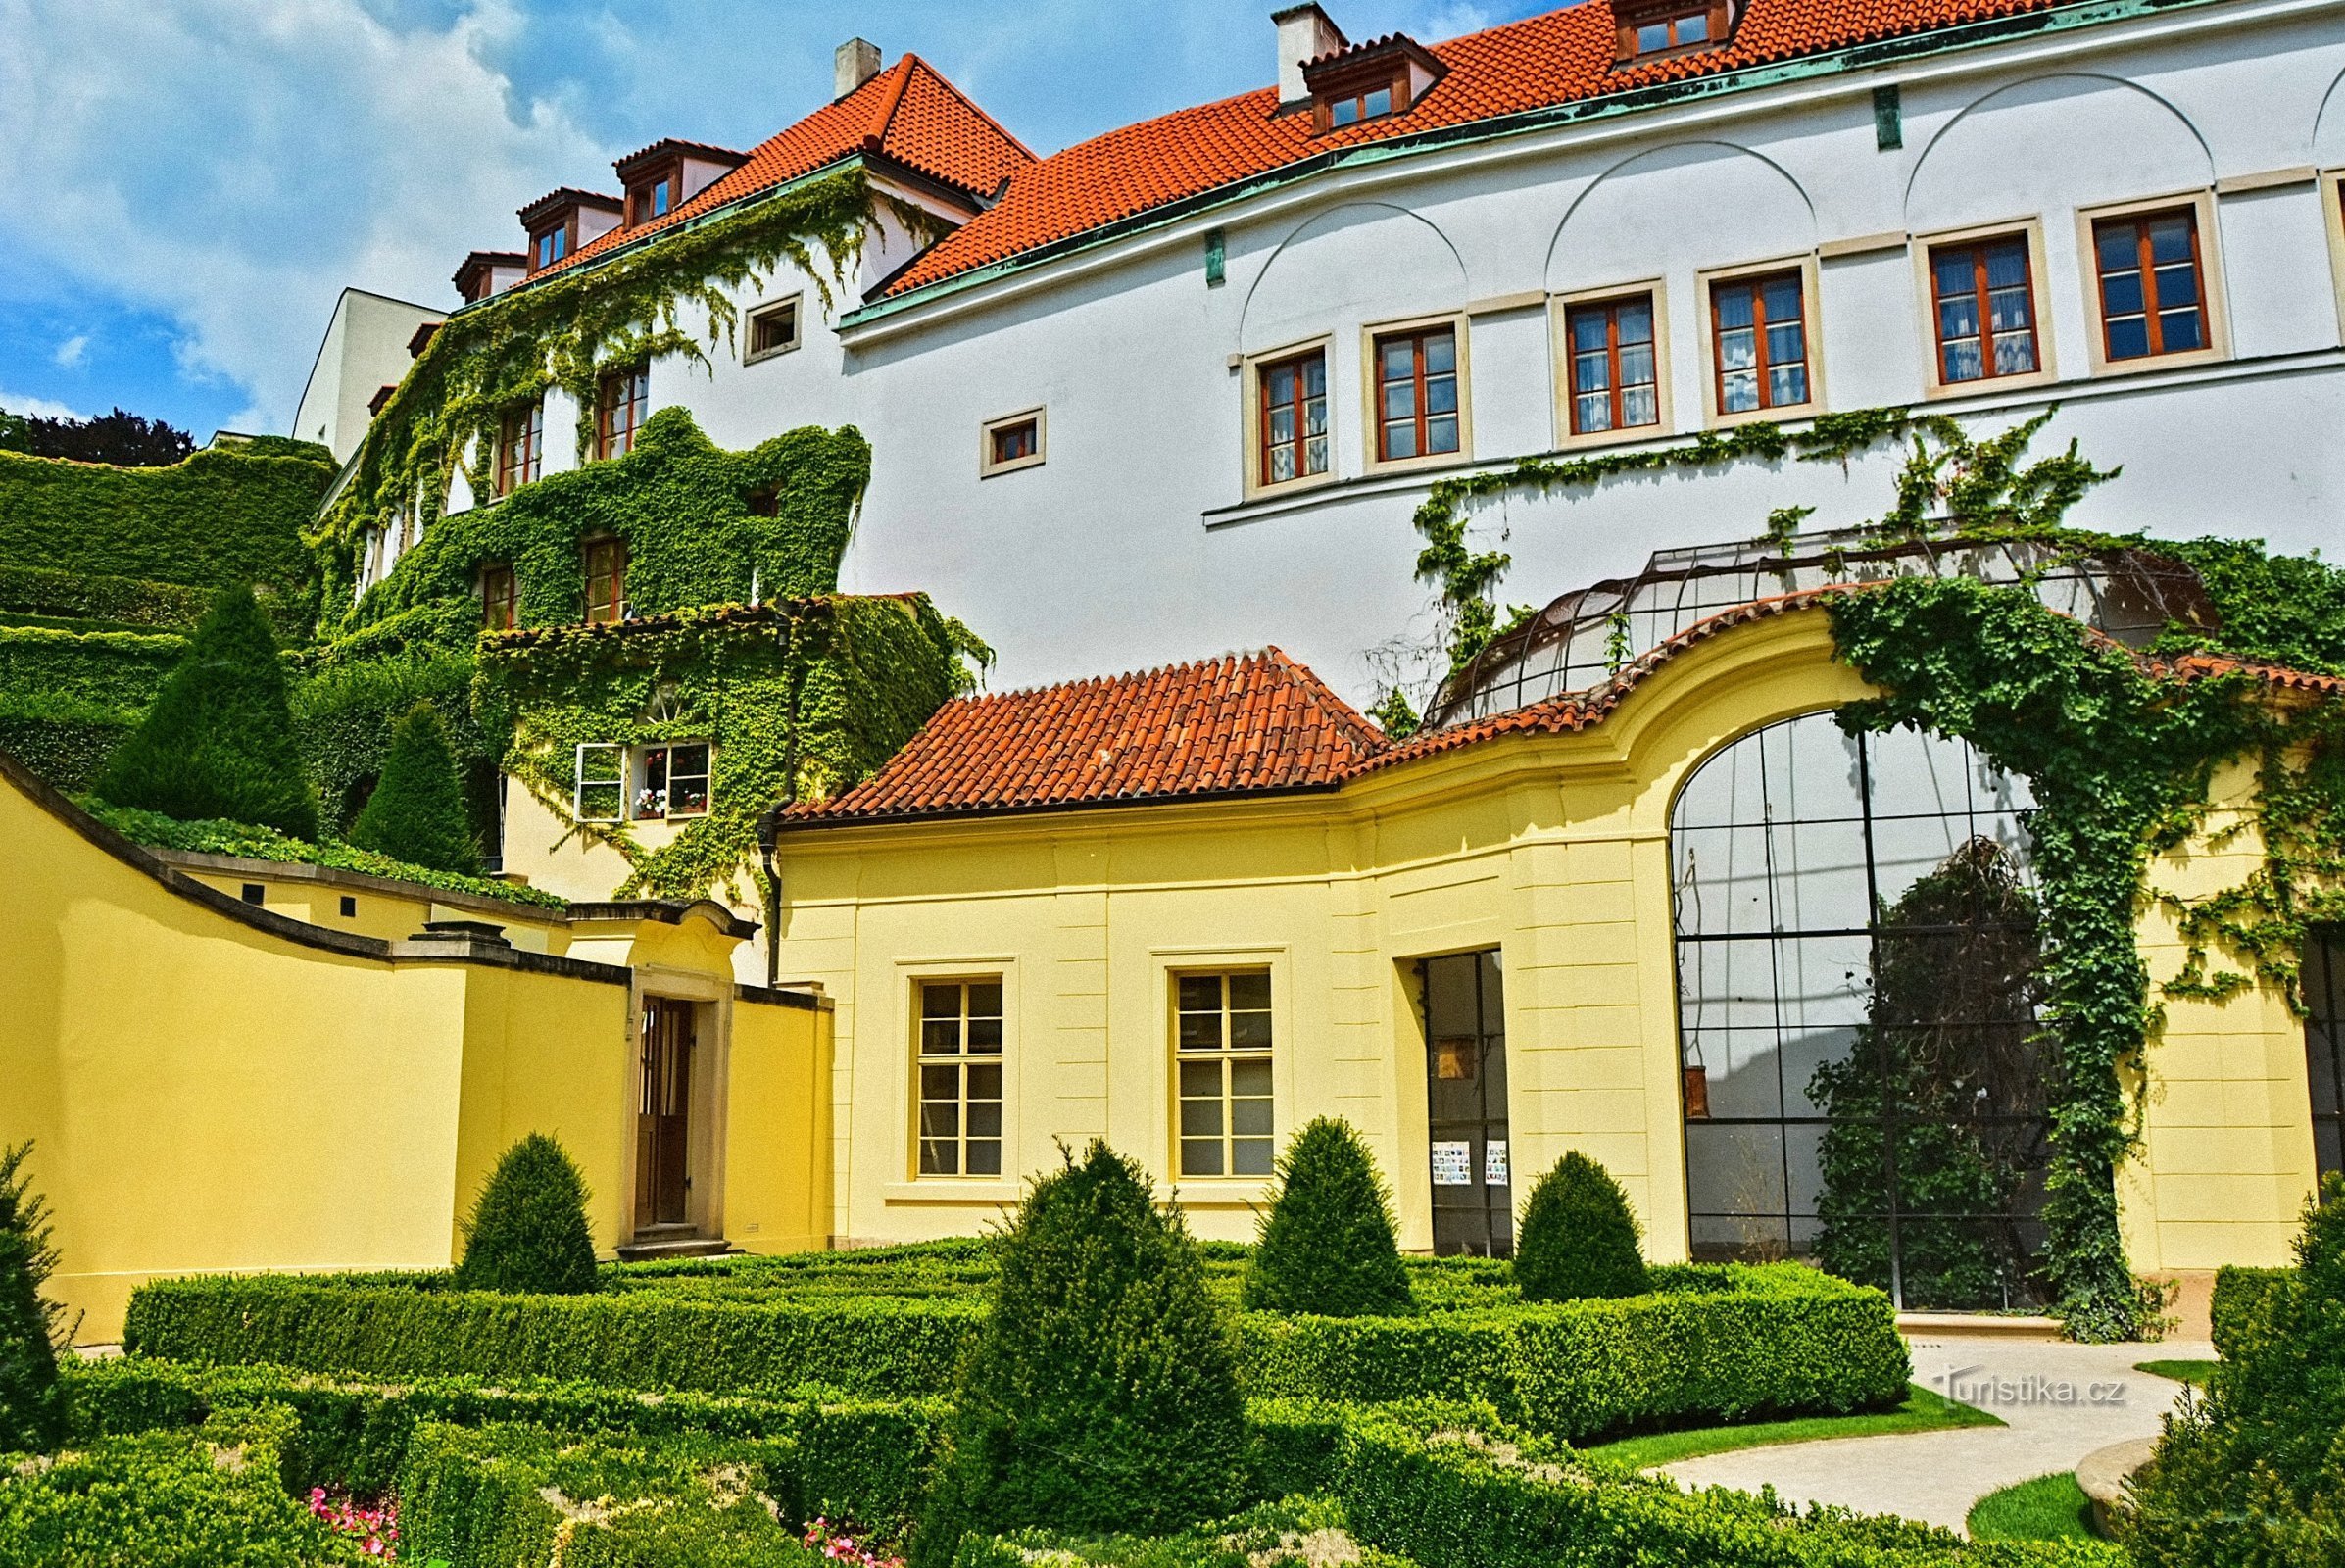 Vrtbovská garden with a beautiful view of Prague